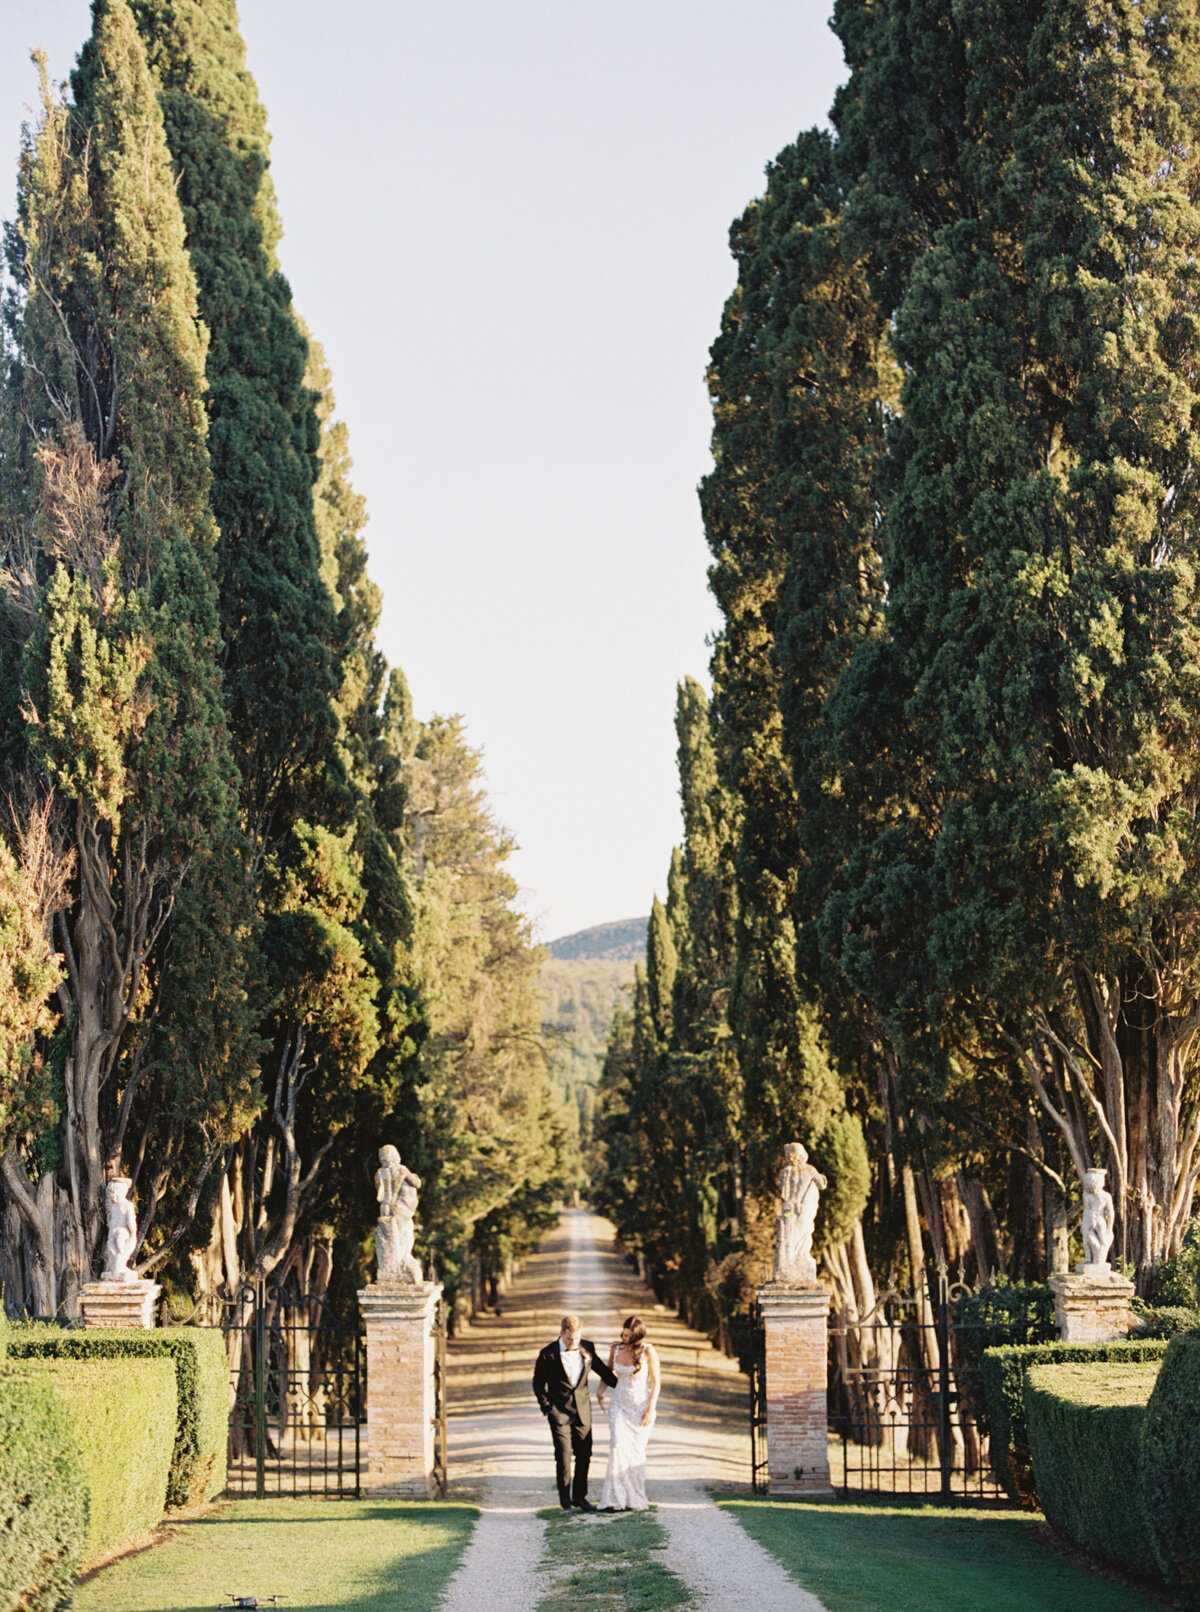 Borgo-Stommenano-Florence-Tuscany-Katie-Grant-destination-wedding (33 of 47).jpg